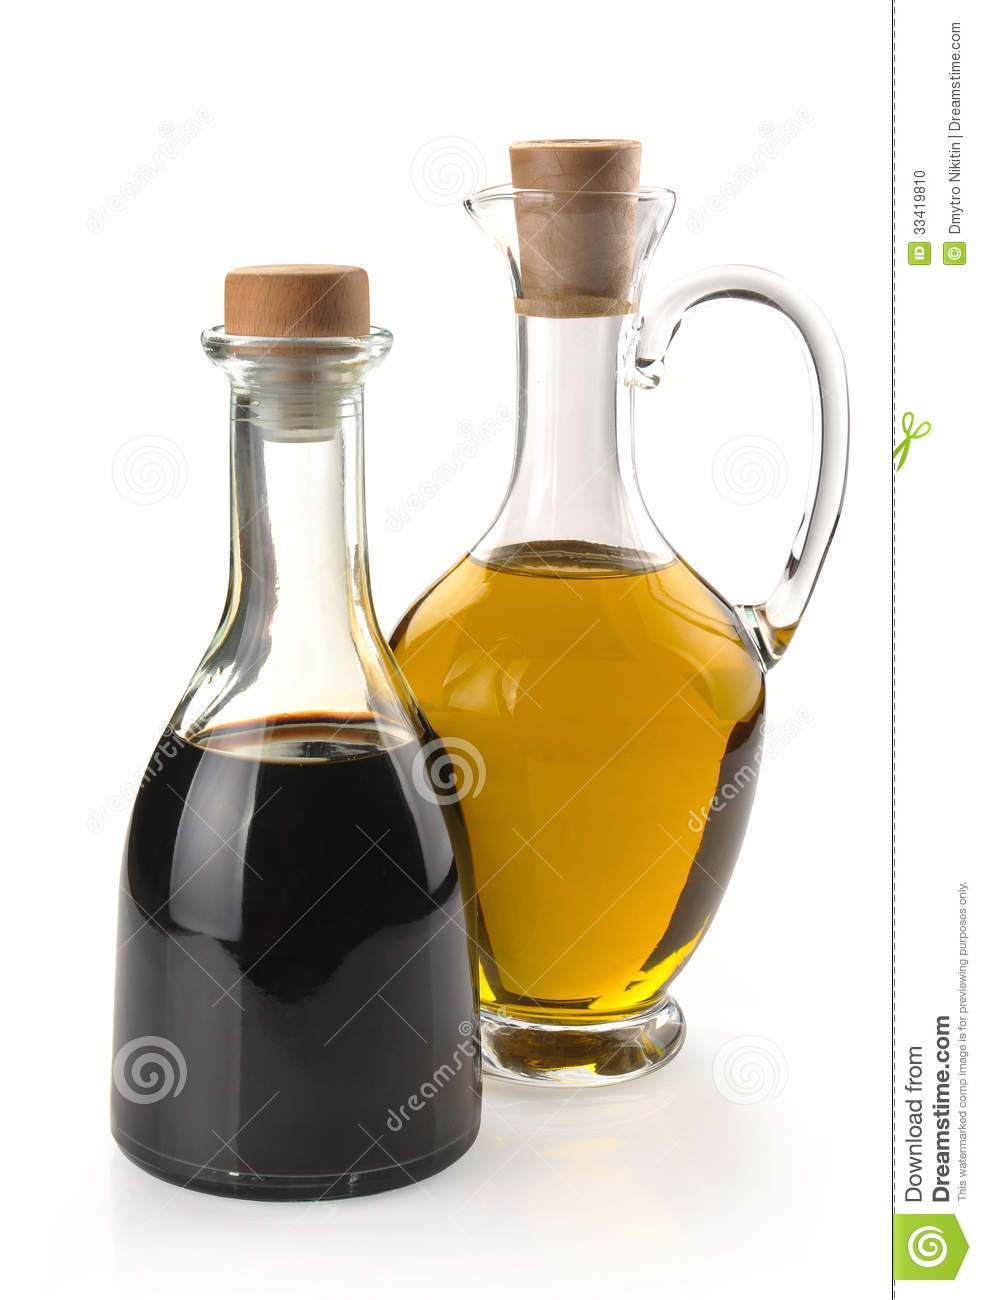 Balsamic Vinegar And Olive Oil Stock Photo   Image  33419810